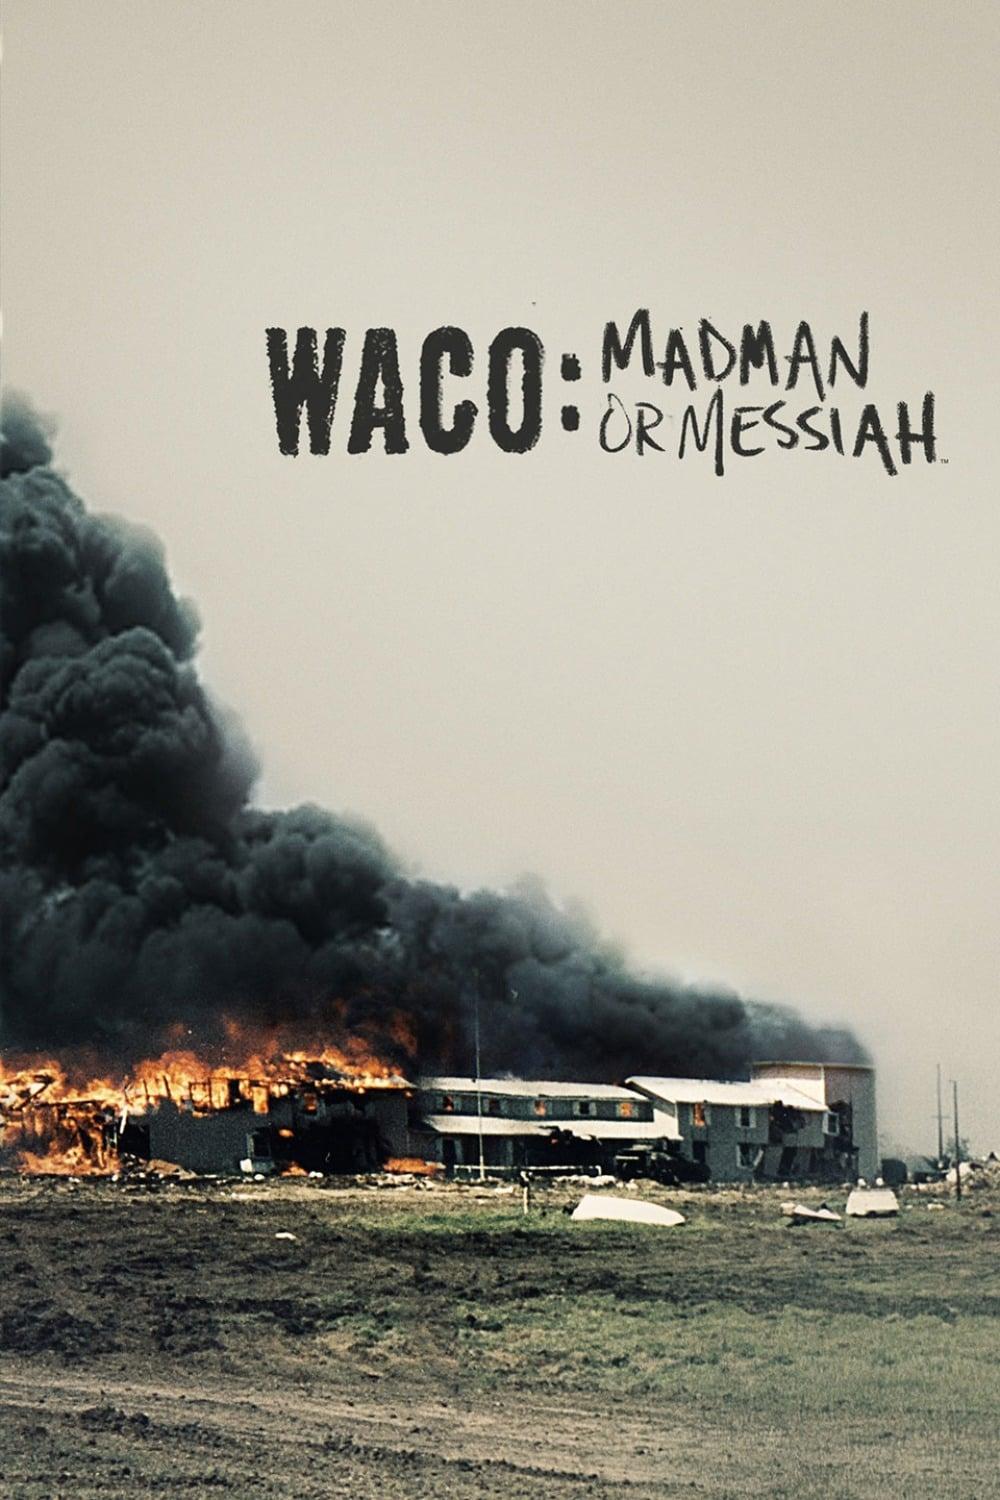 Waco: Madman or Messiah poster